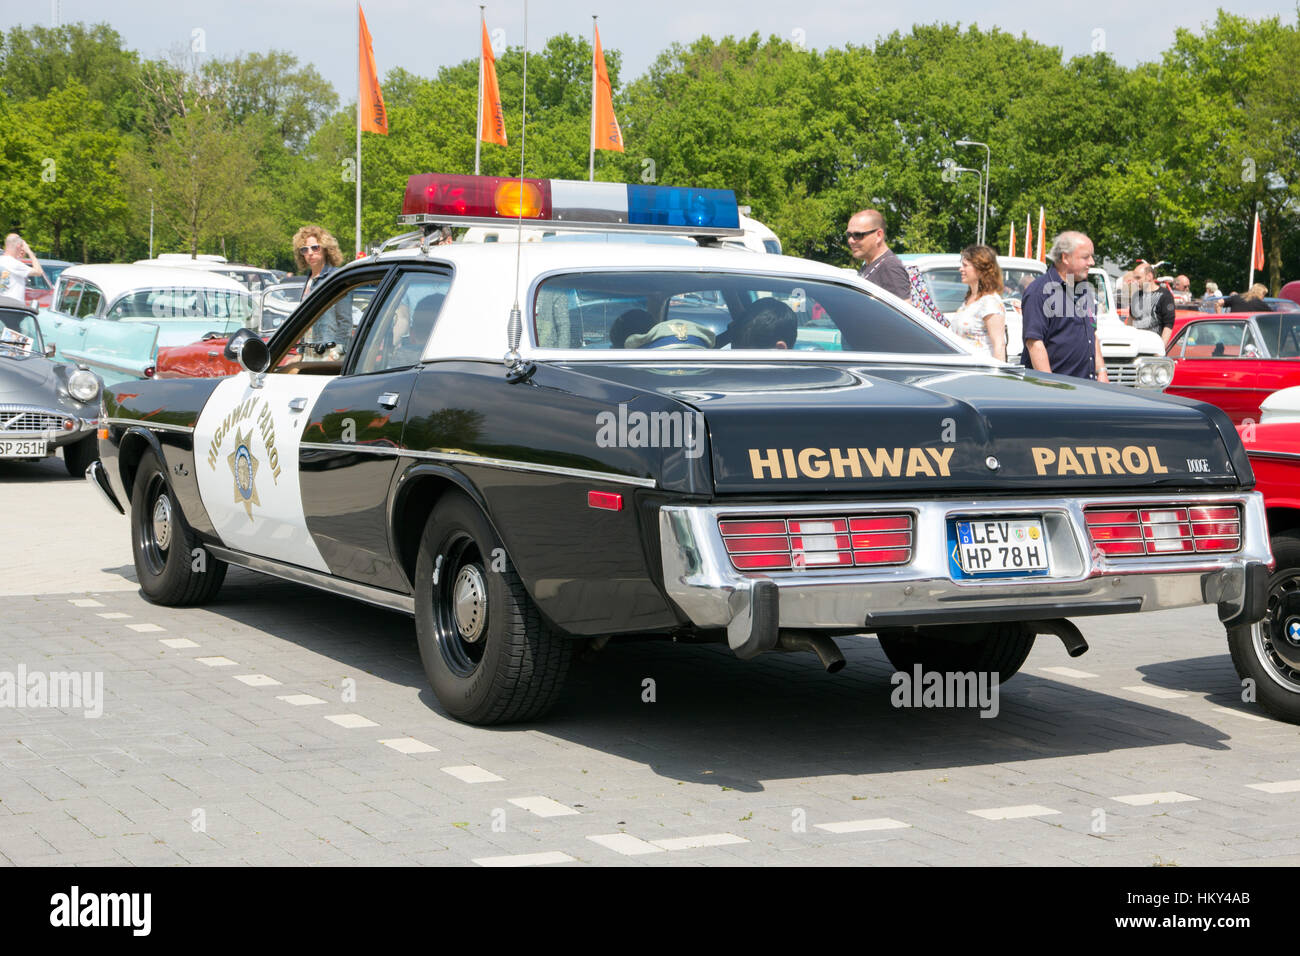 1978 Dodge Monaco California Highway Patrol klassische Polizeiauto  Stockfotografie - Alamy